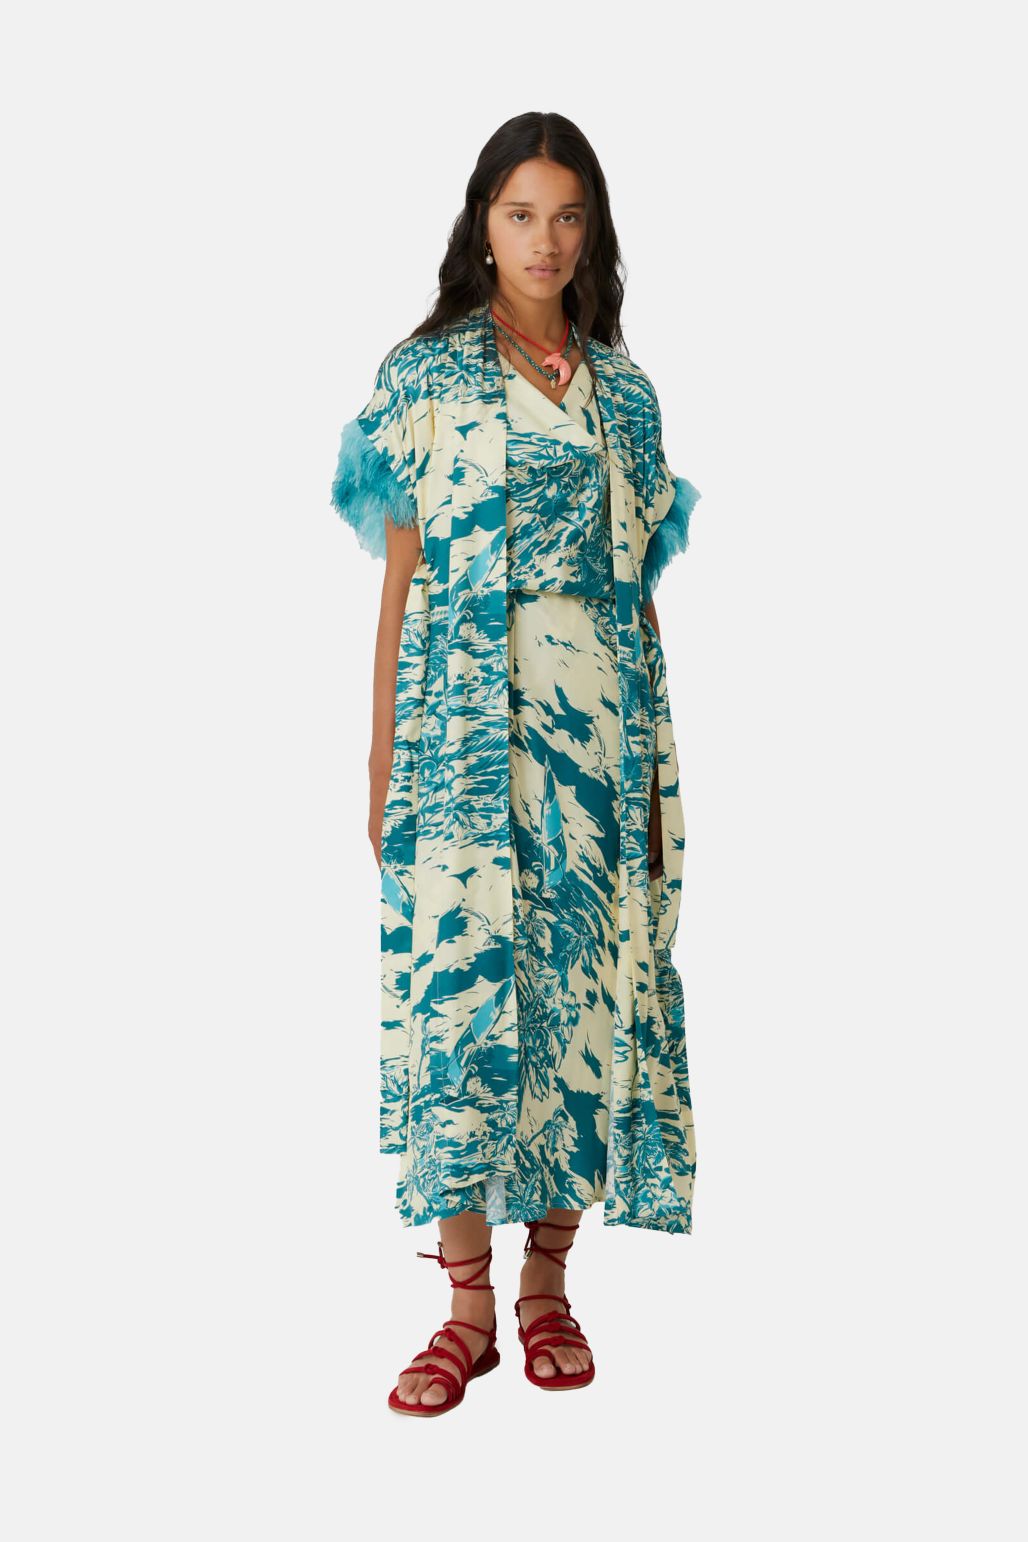 Blue Print Kimono Dress with detachable feathers